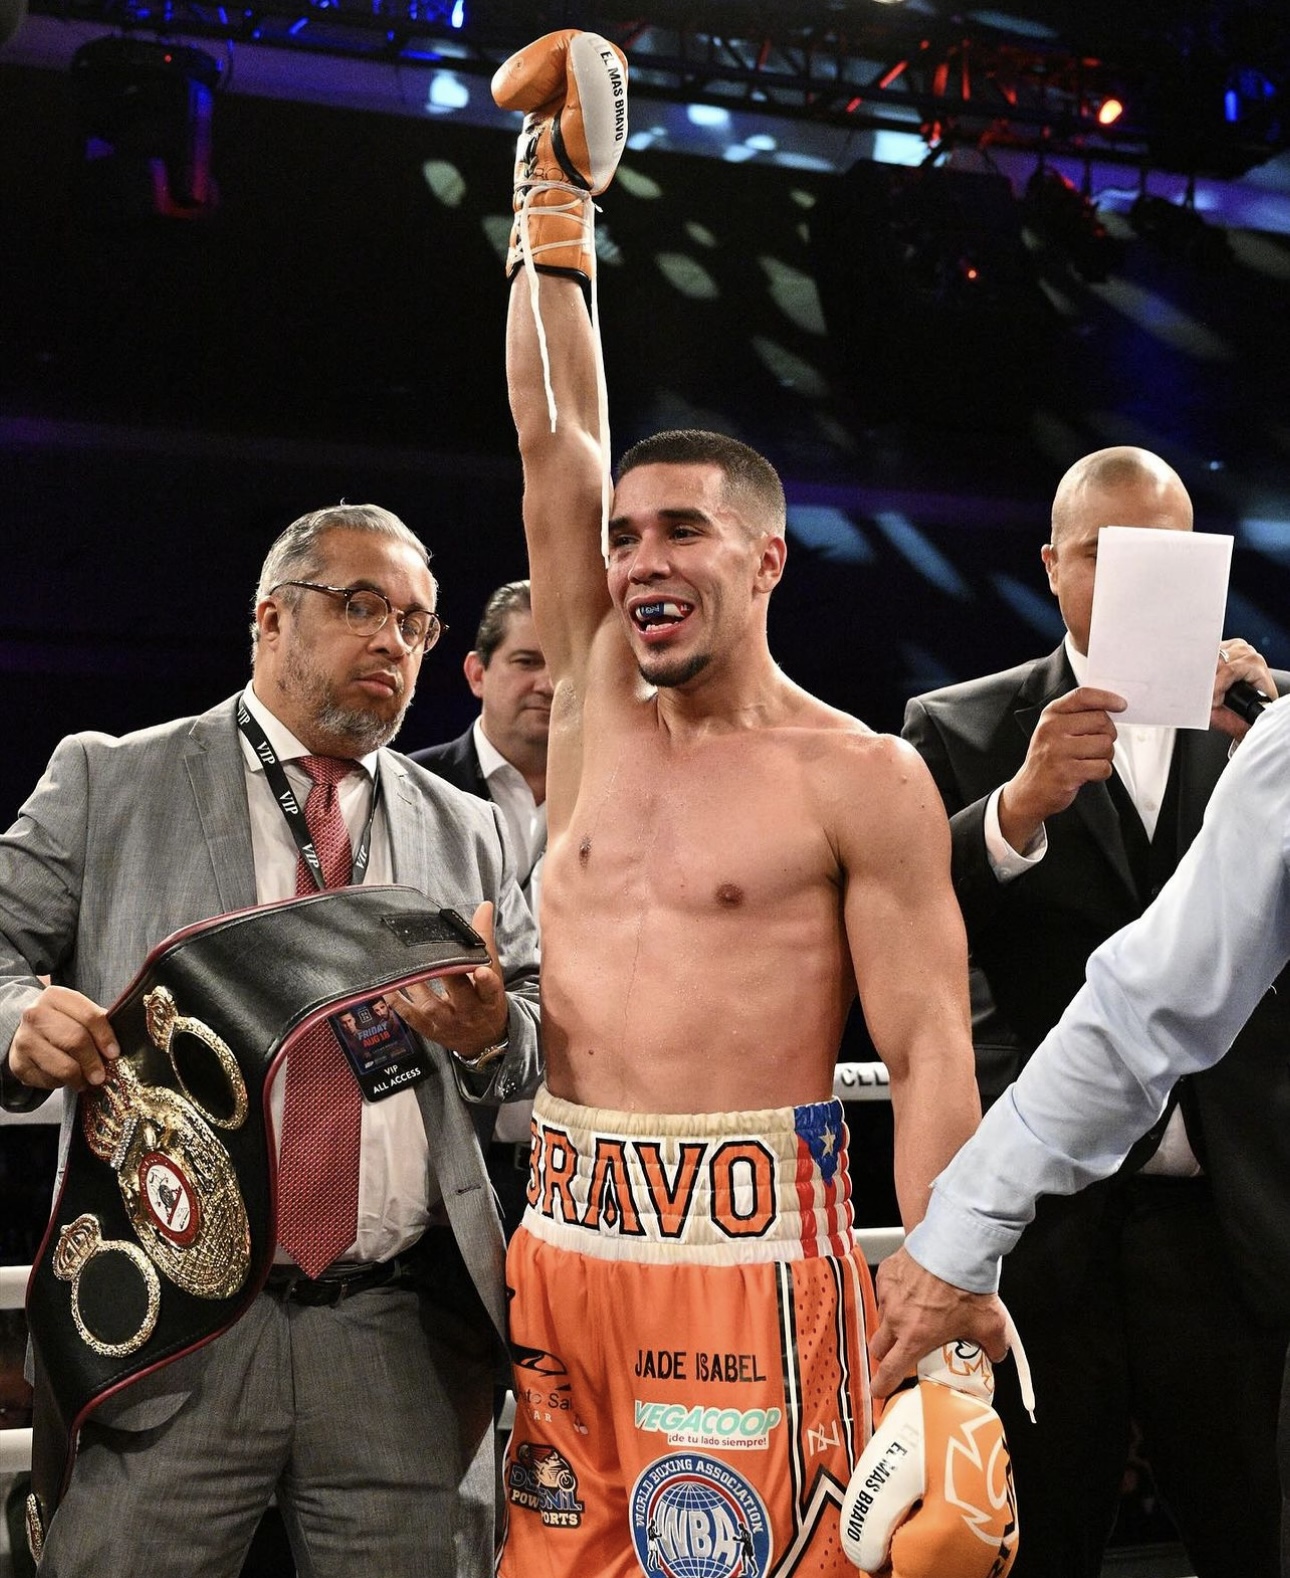 Bravo defeats Madera in Orlando and is the new WBA regional champion 